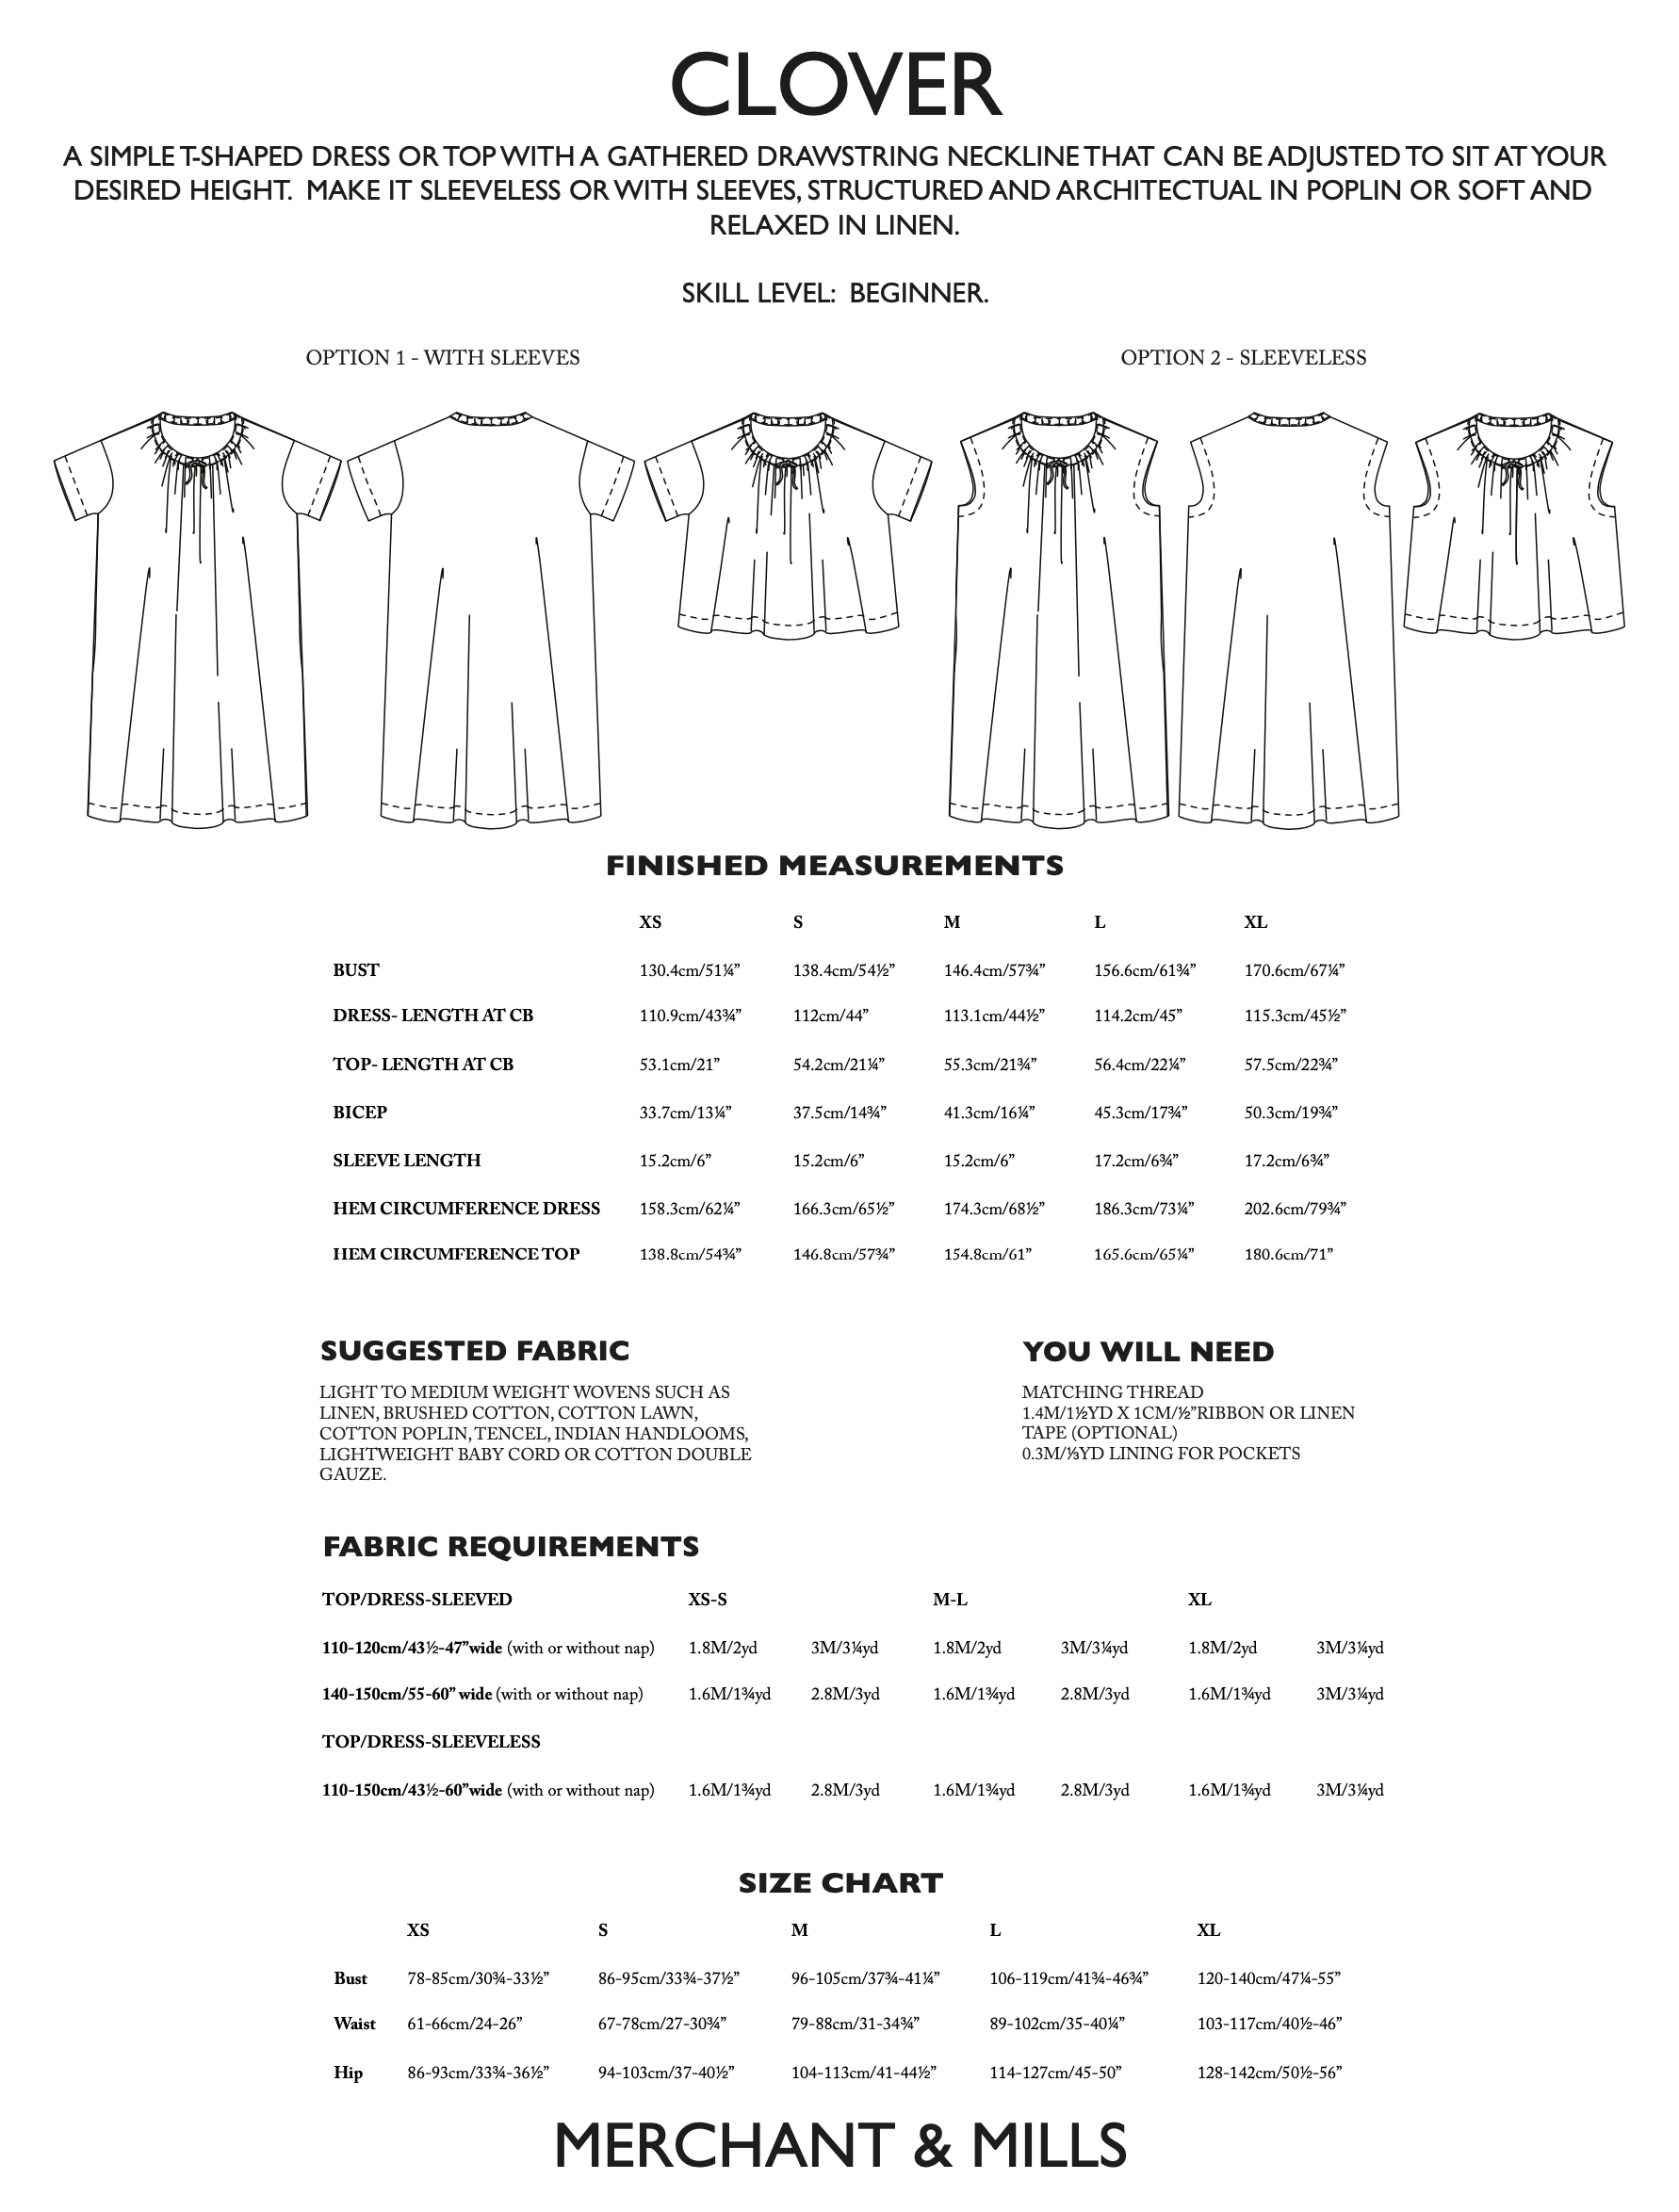 Merchant & Mills Clover Dress and Top - The Fold Line